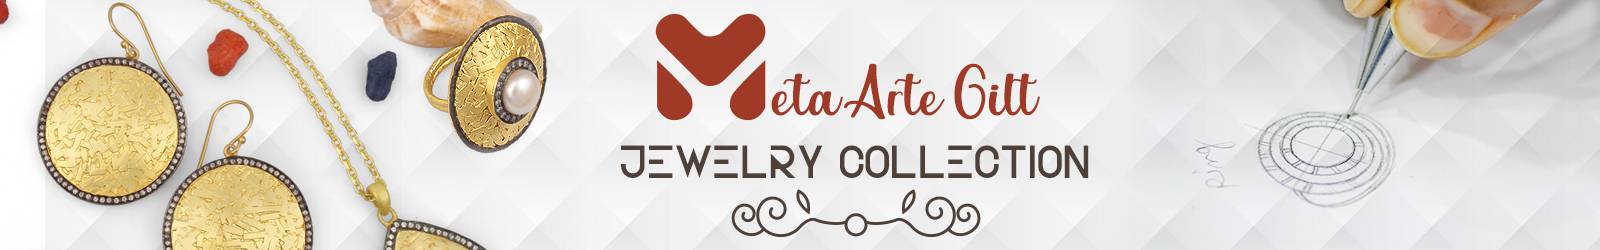 Meta Arte Gilt Jewelry Collection